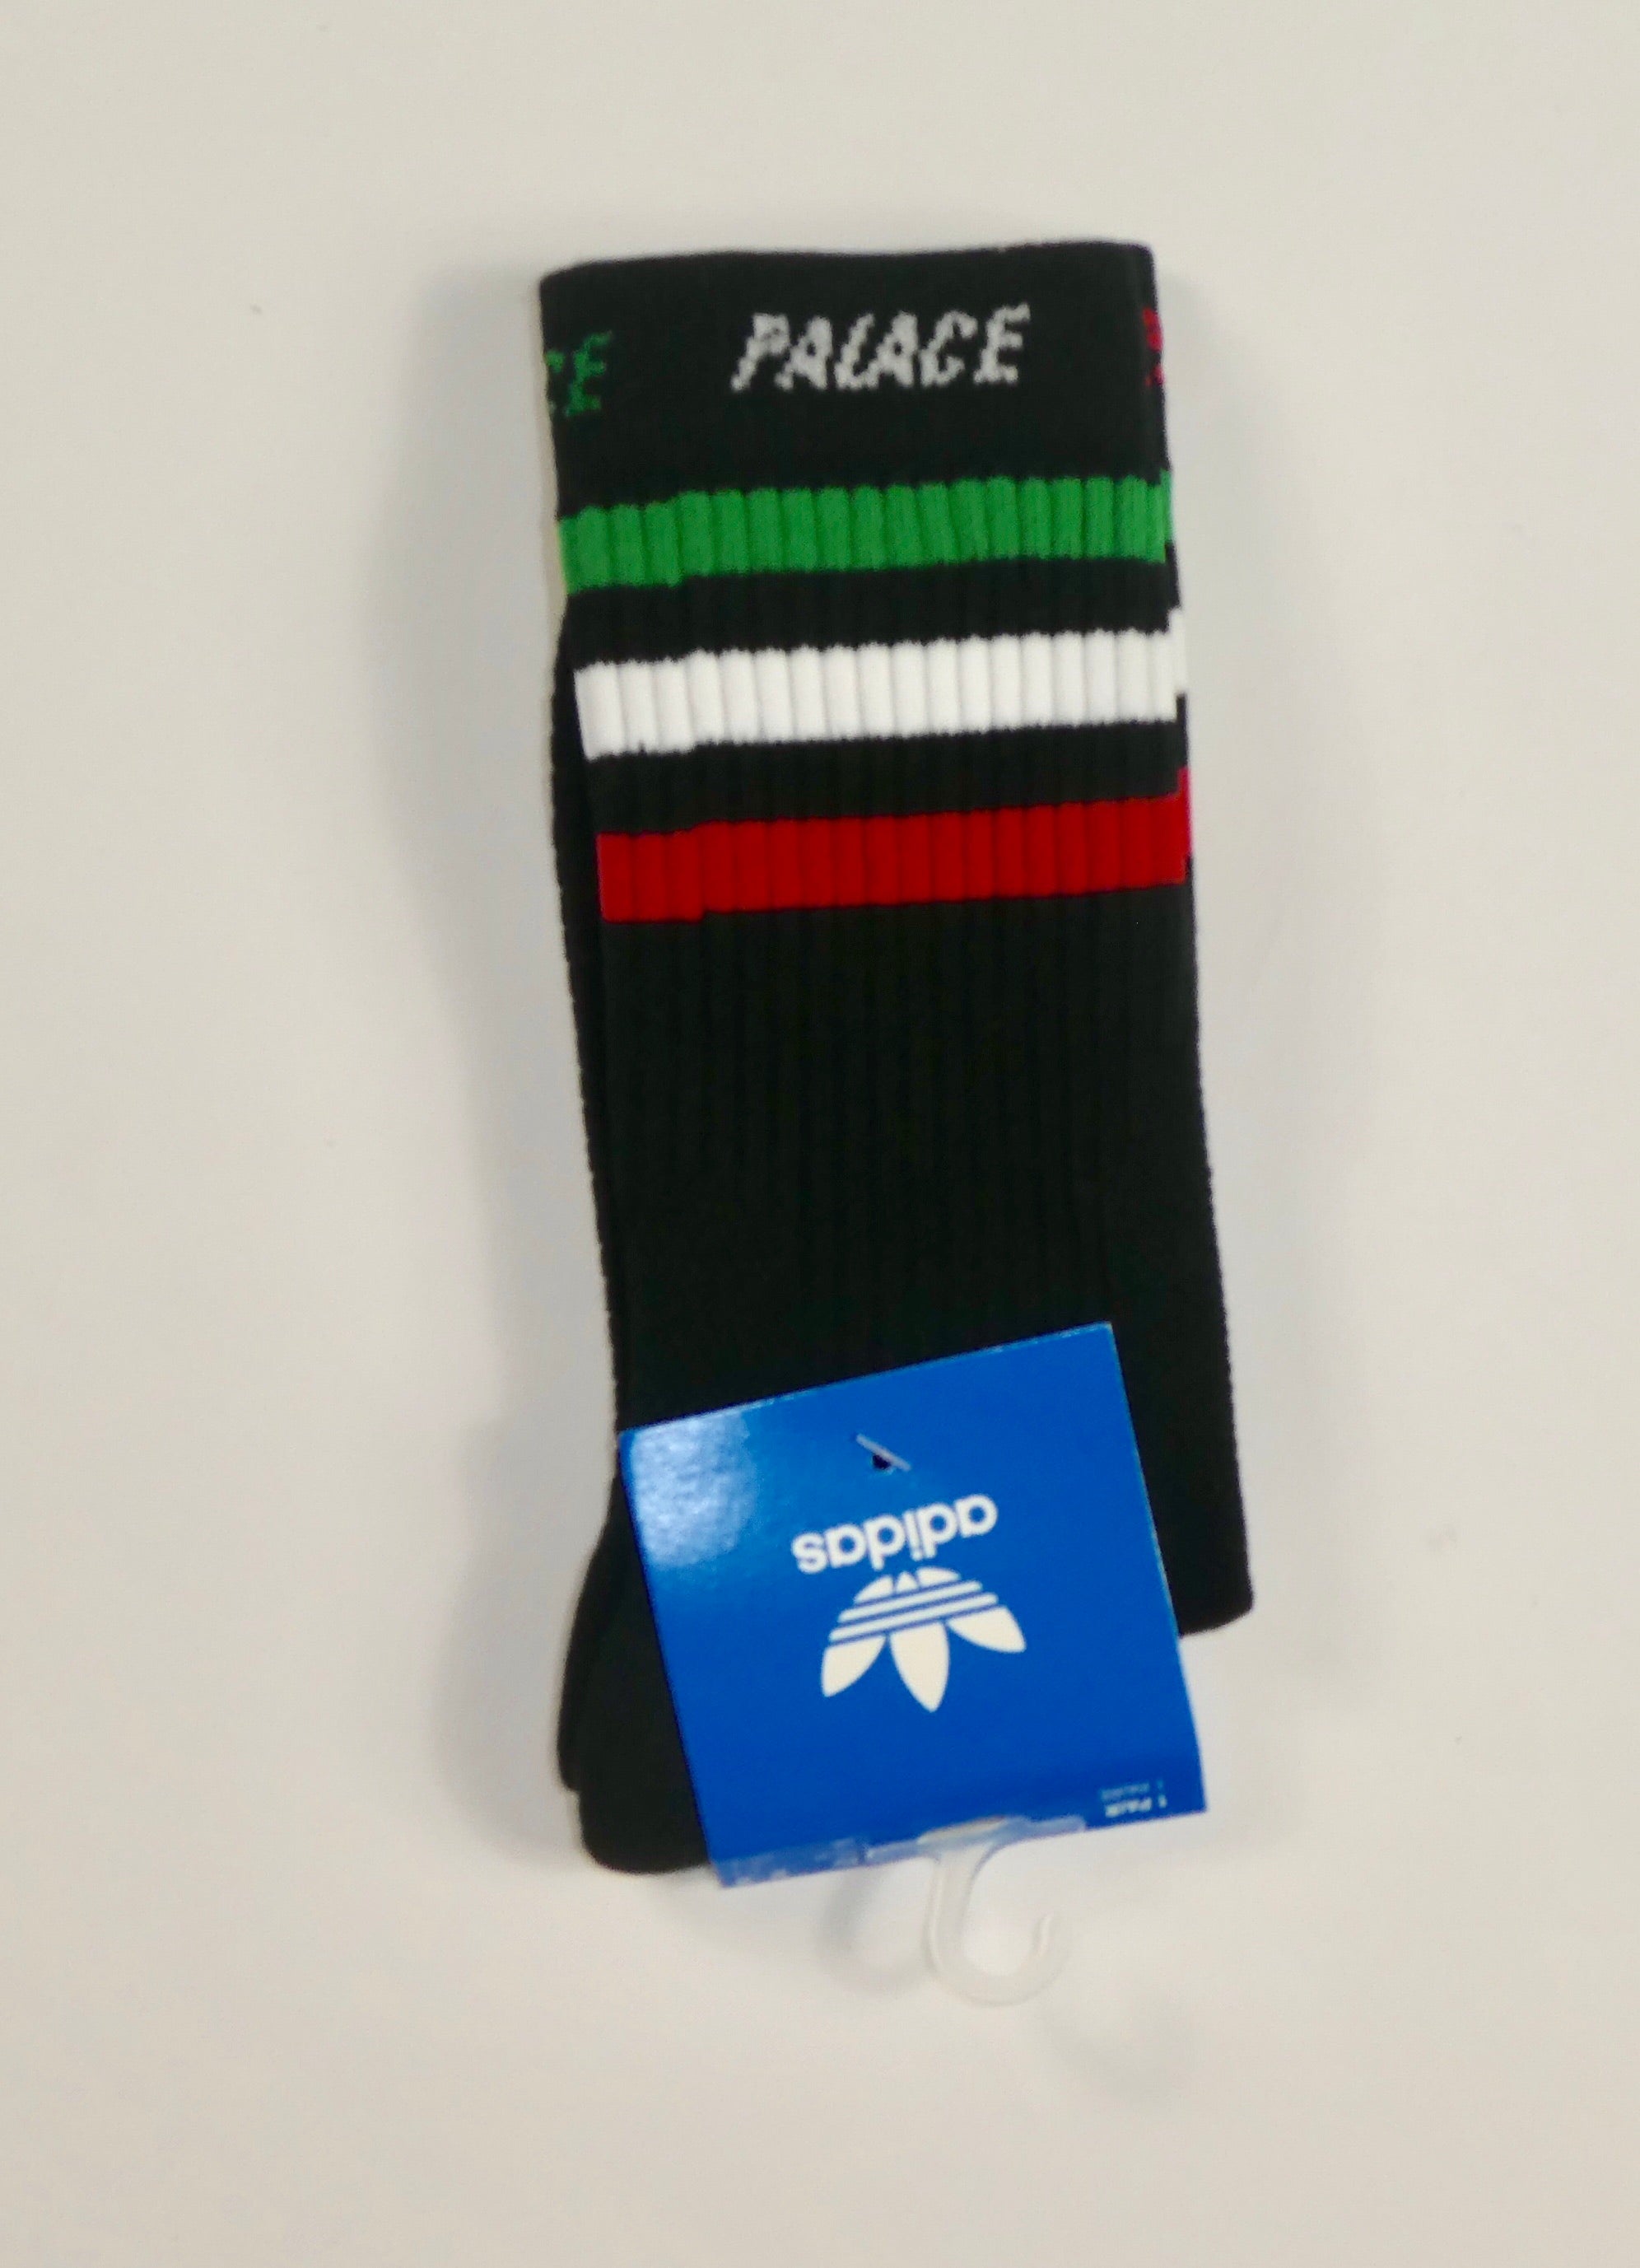 palace adidas socks